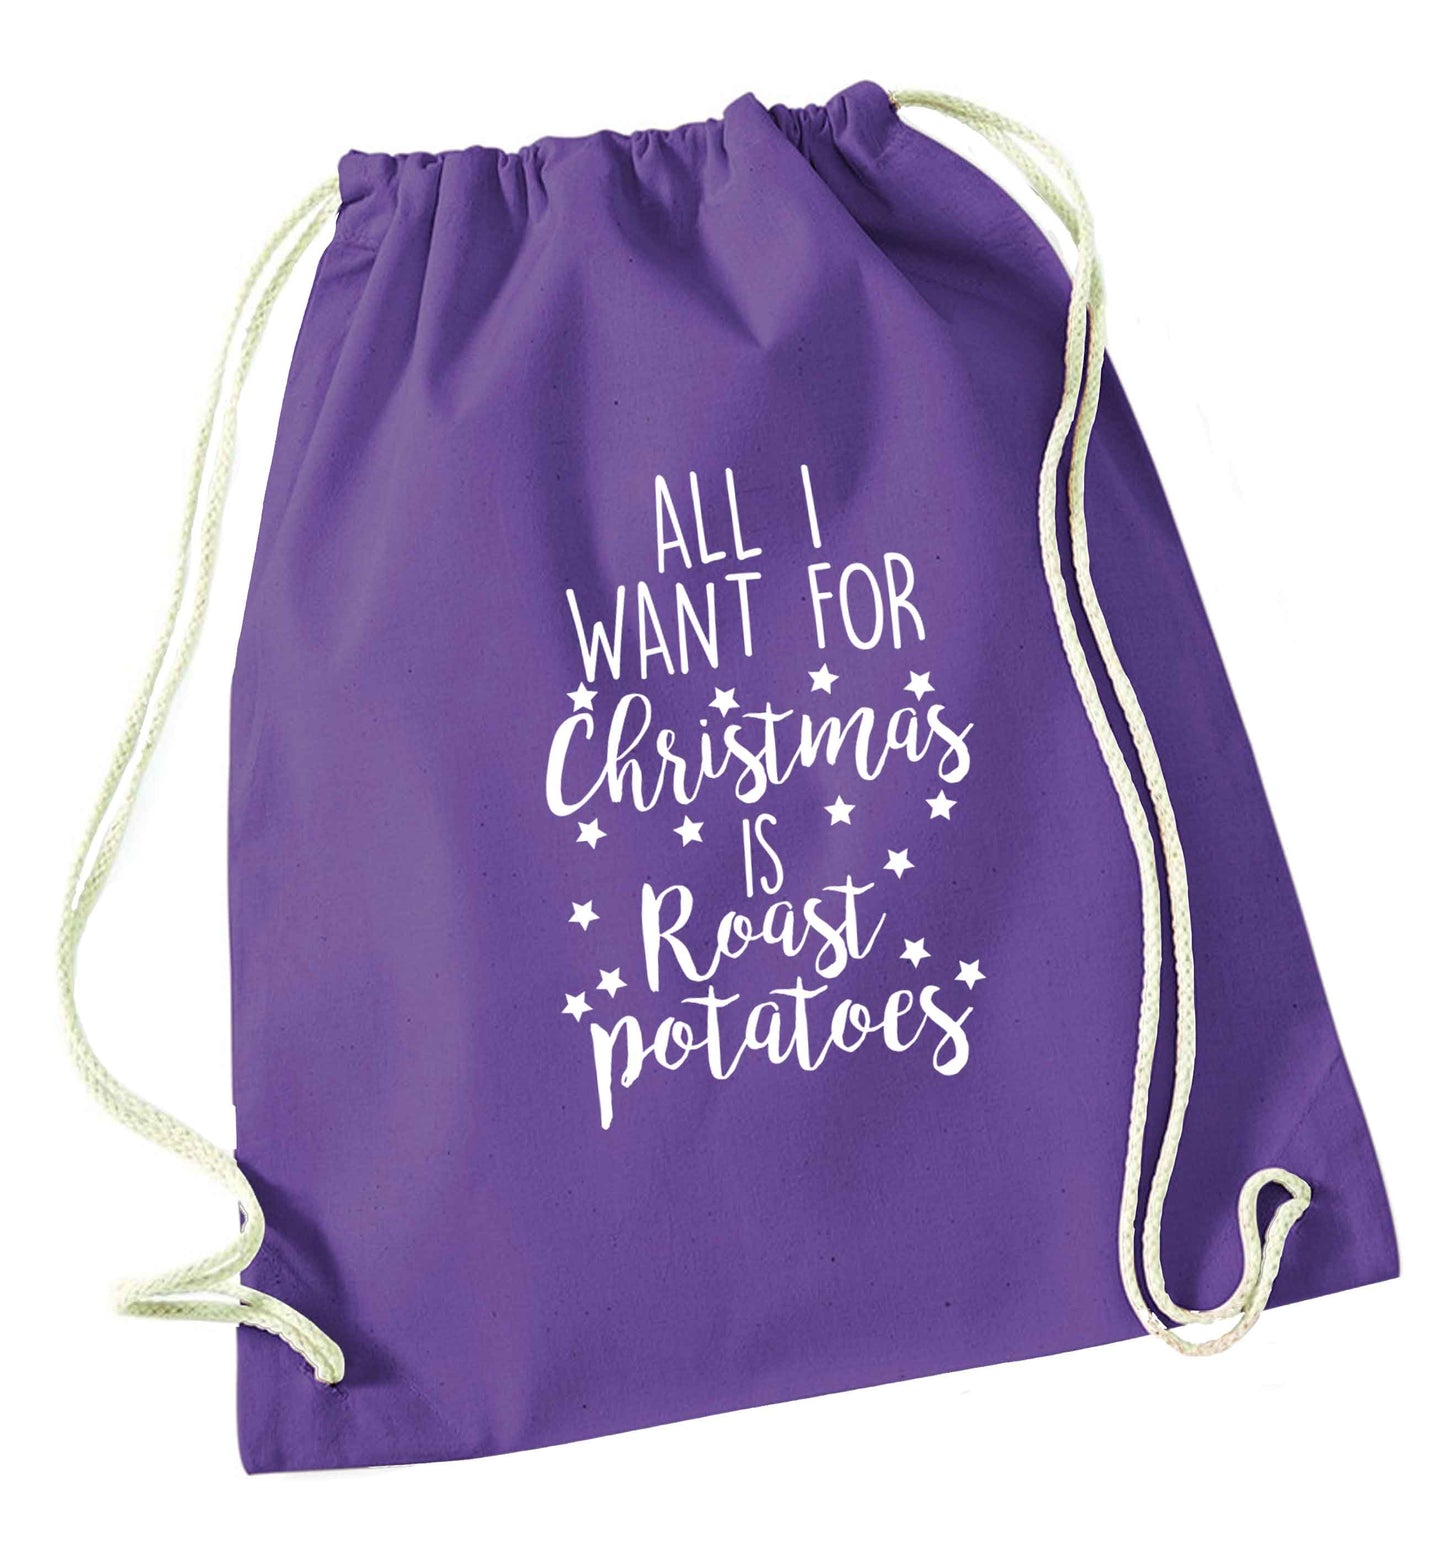 All I want for Christmas is roast potatoes purple drawstring bag